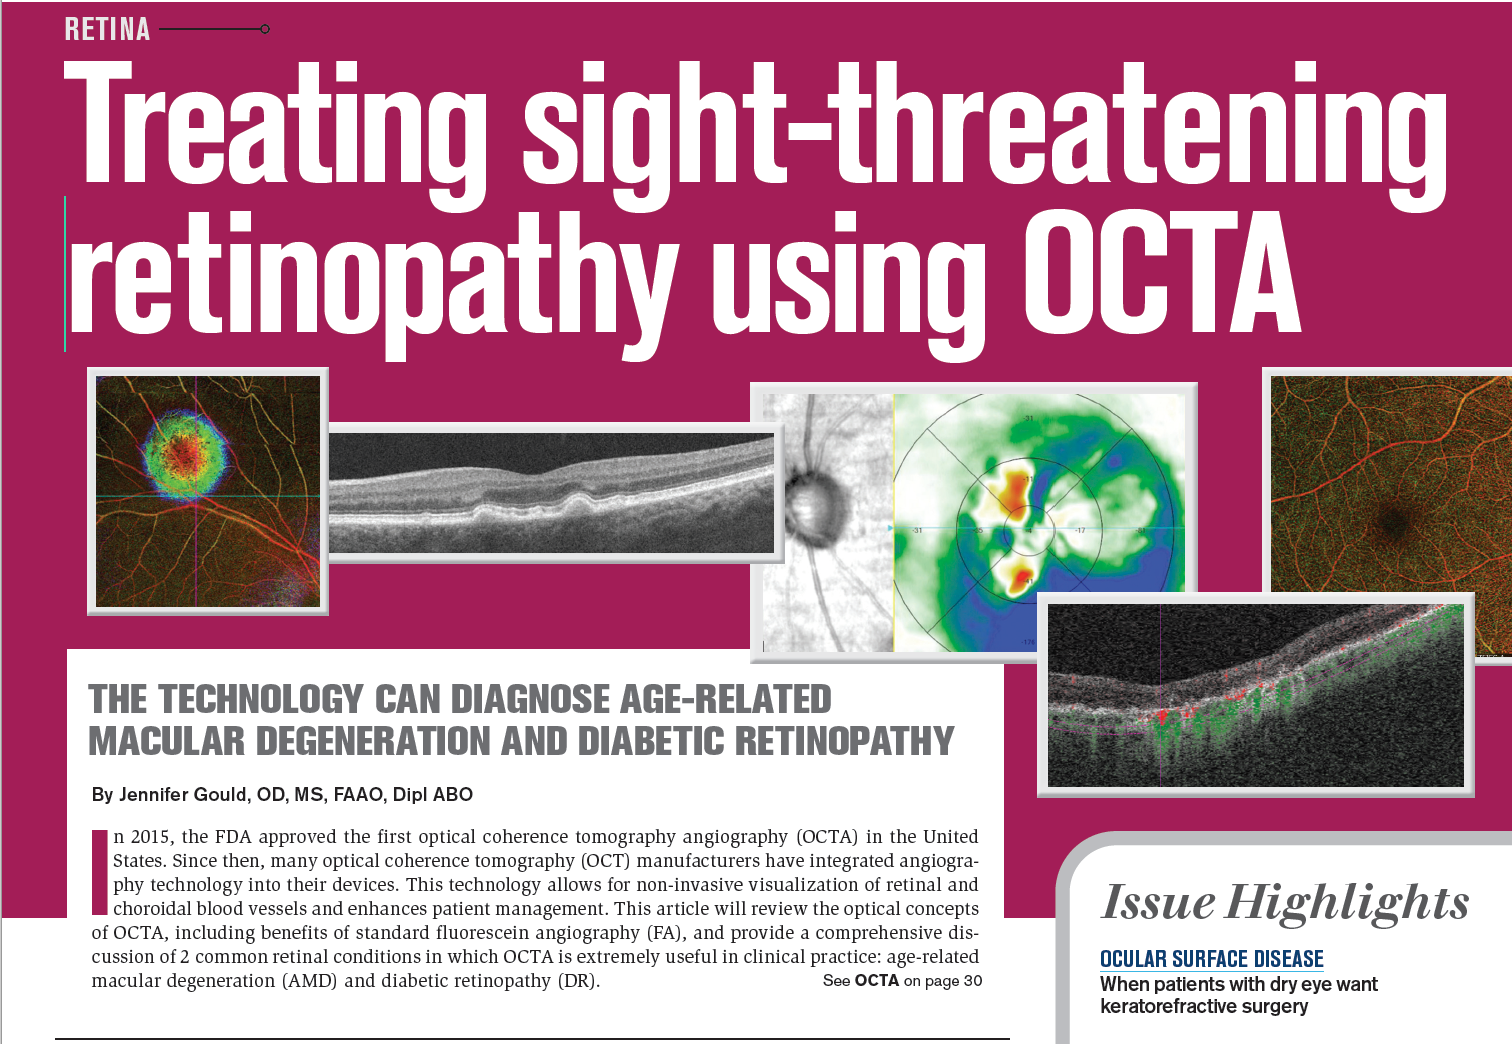 Treating sight-threatening retinopathy using OCTA